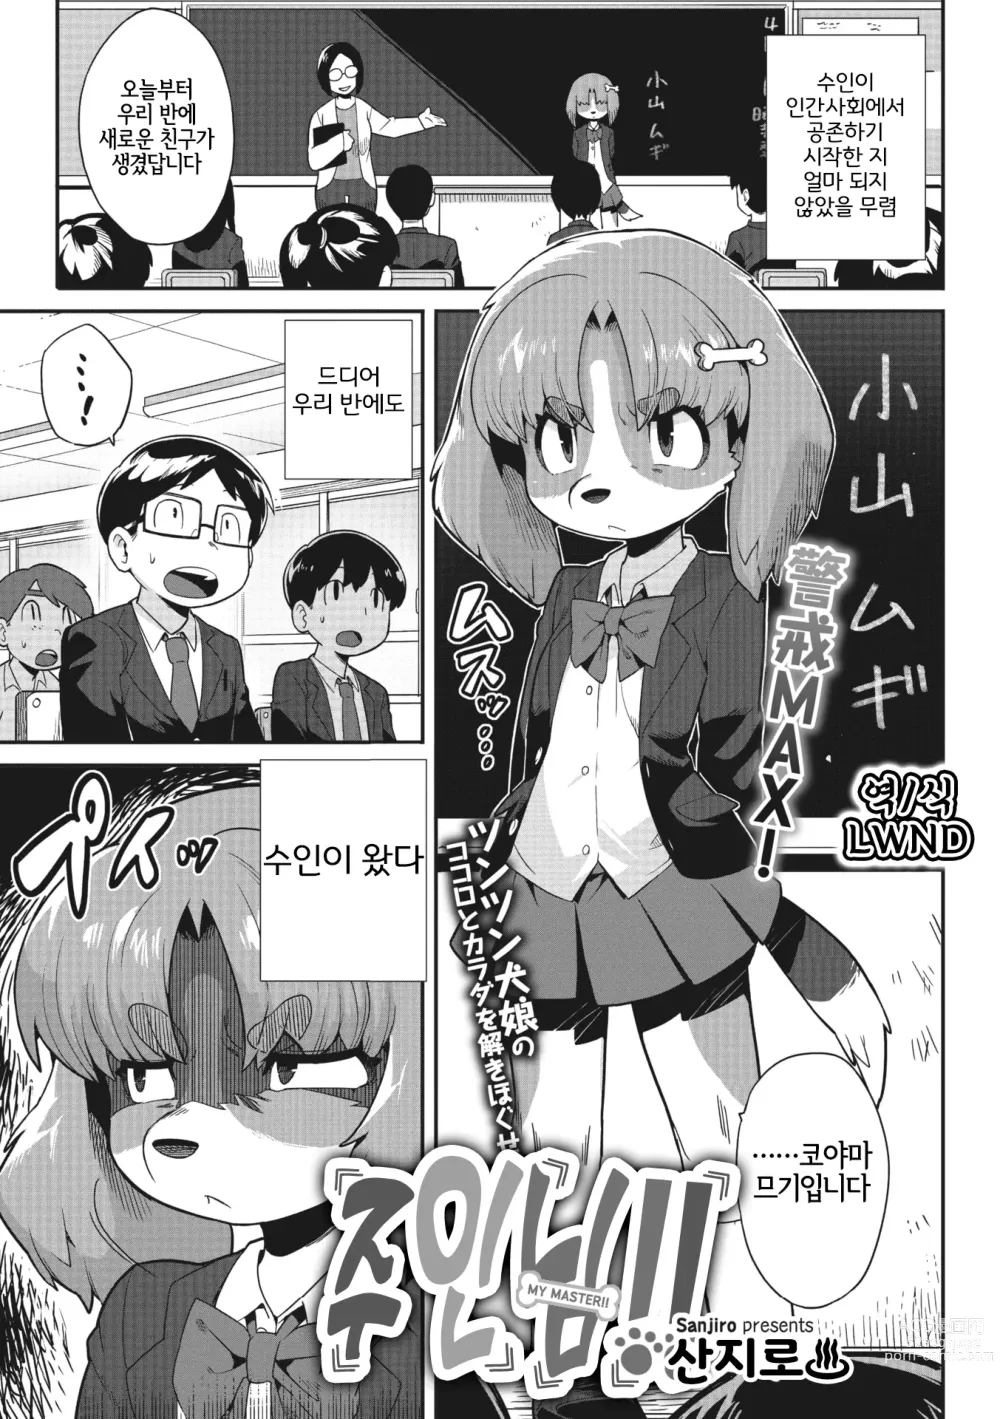 Page 1 of manga  주인님!!